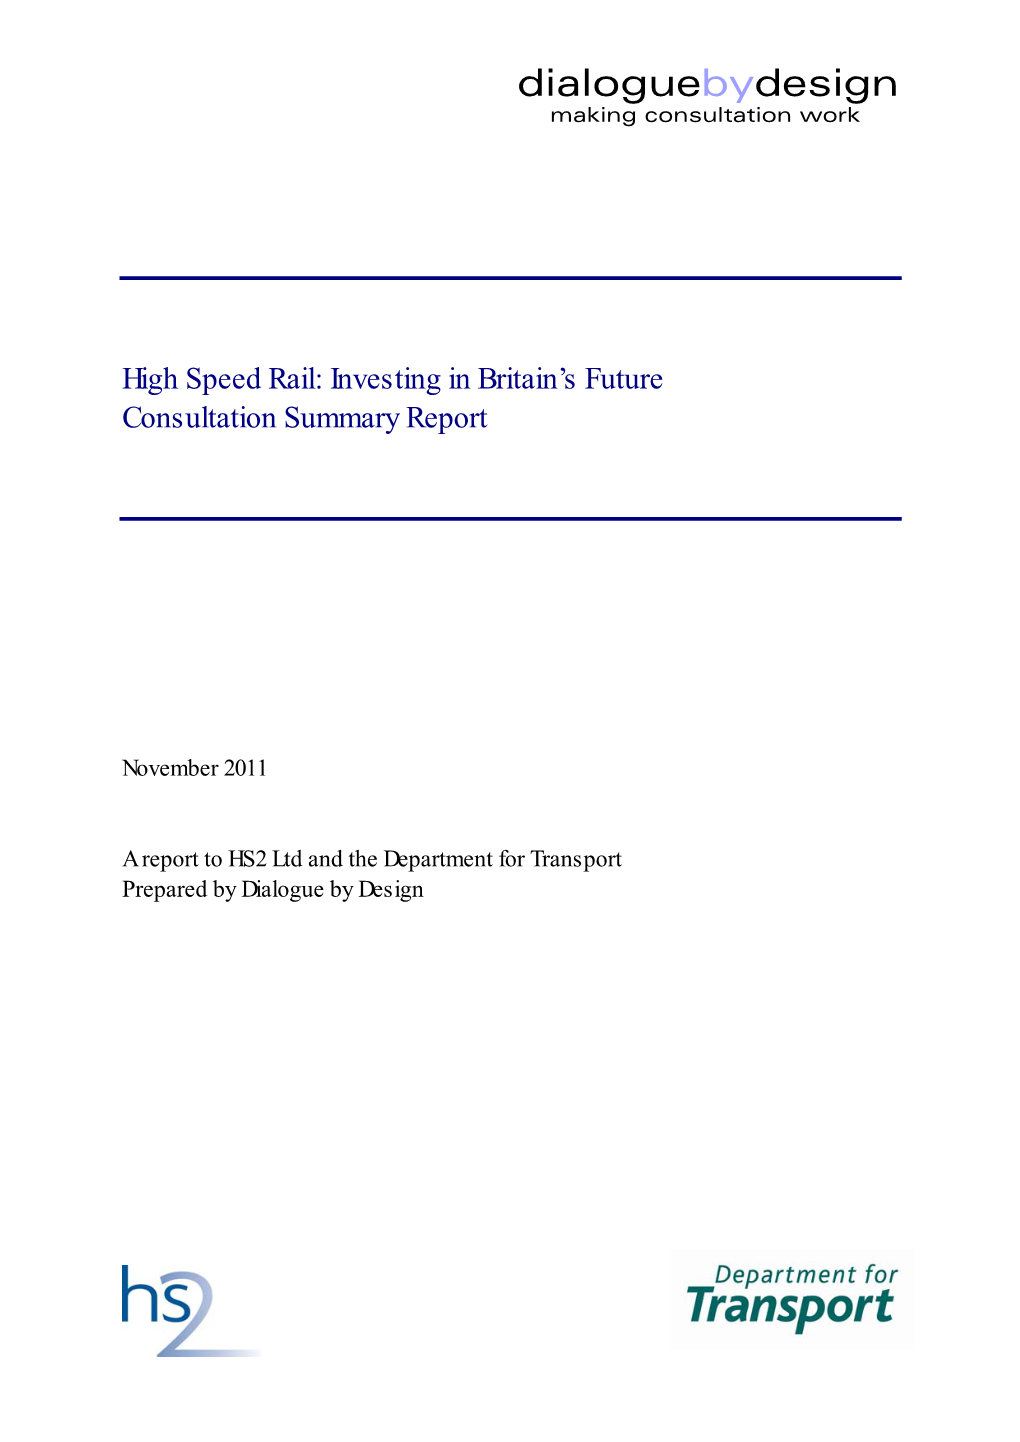 High Speed Rail: Investing in Britain’S Future Consultation Summary Report